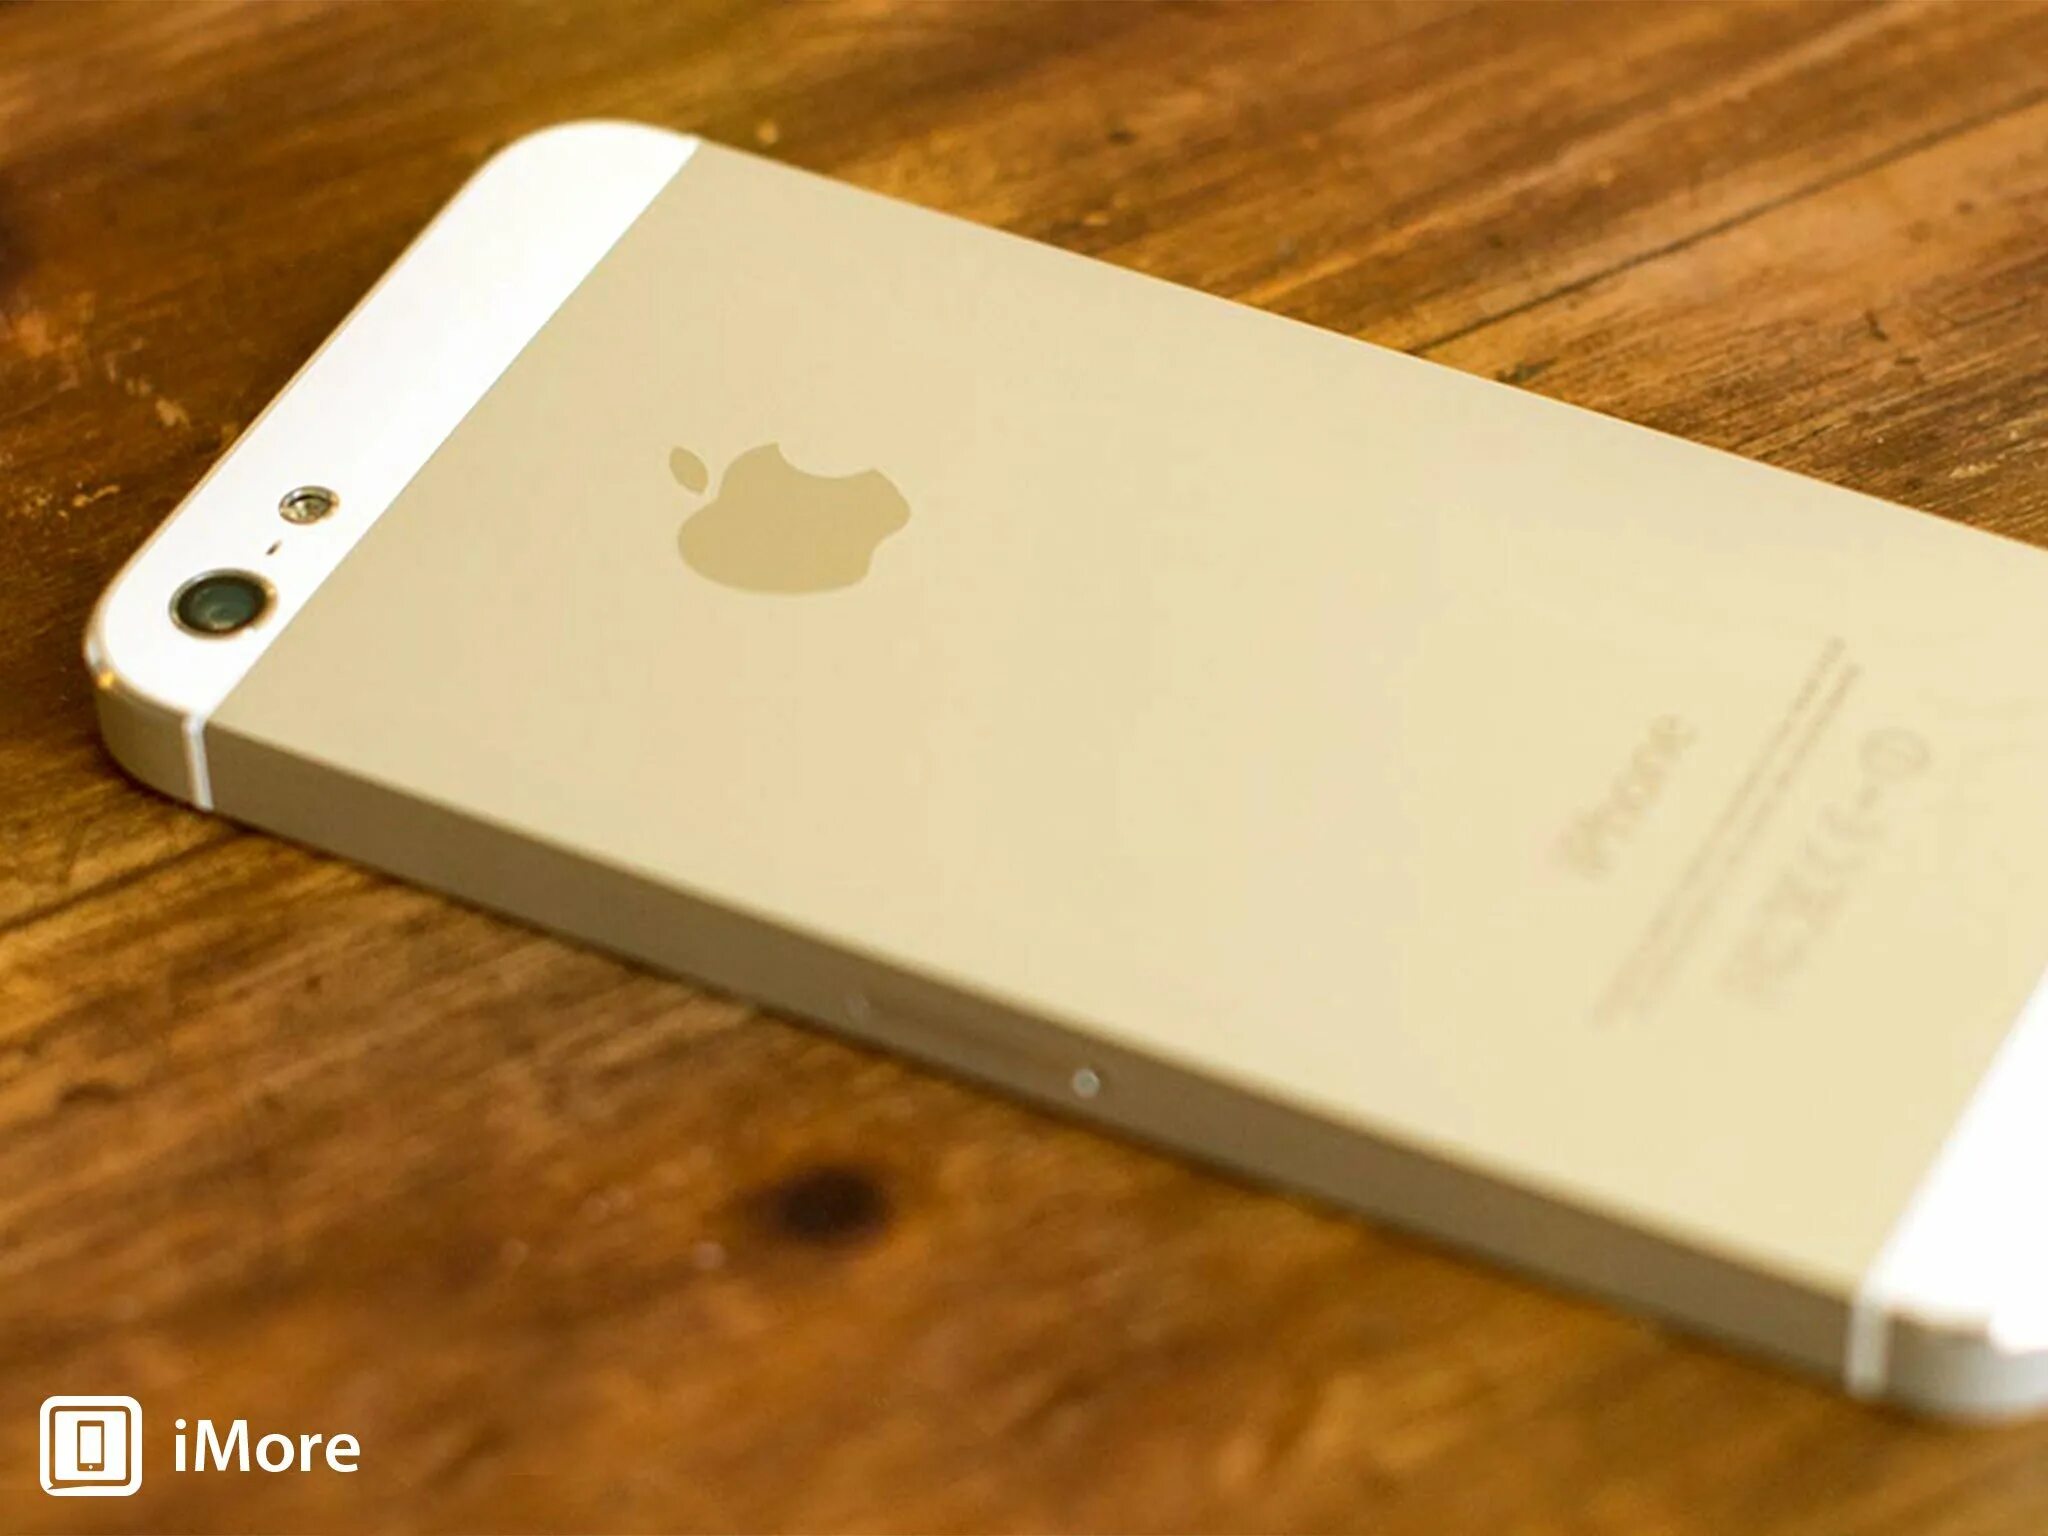 Новый айфон 5. Iphone 5s. Iphone 5s Gold. Айфон 5s белый. Айфон 5s Голд.